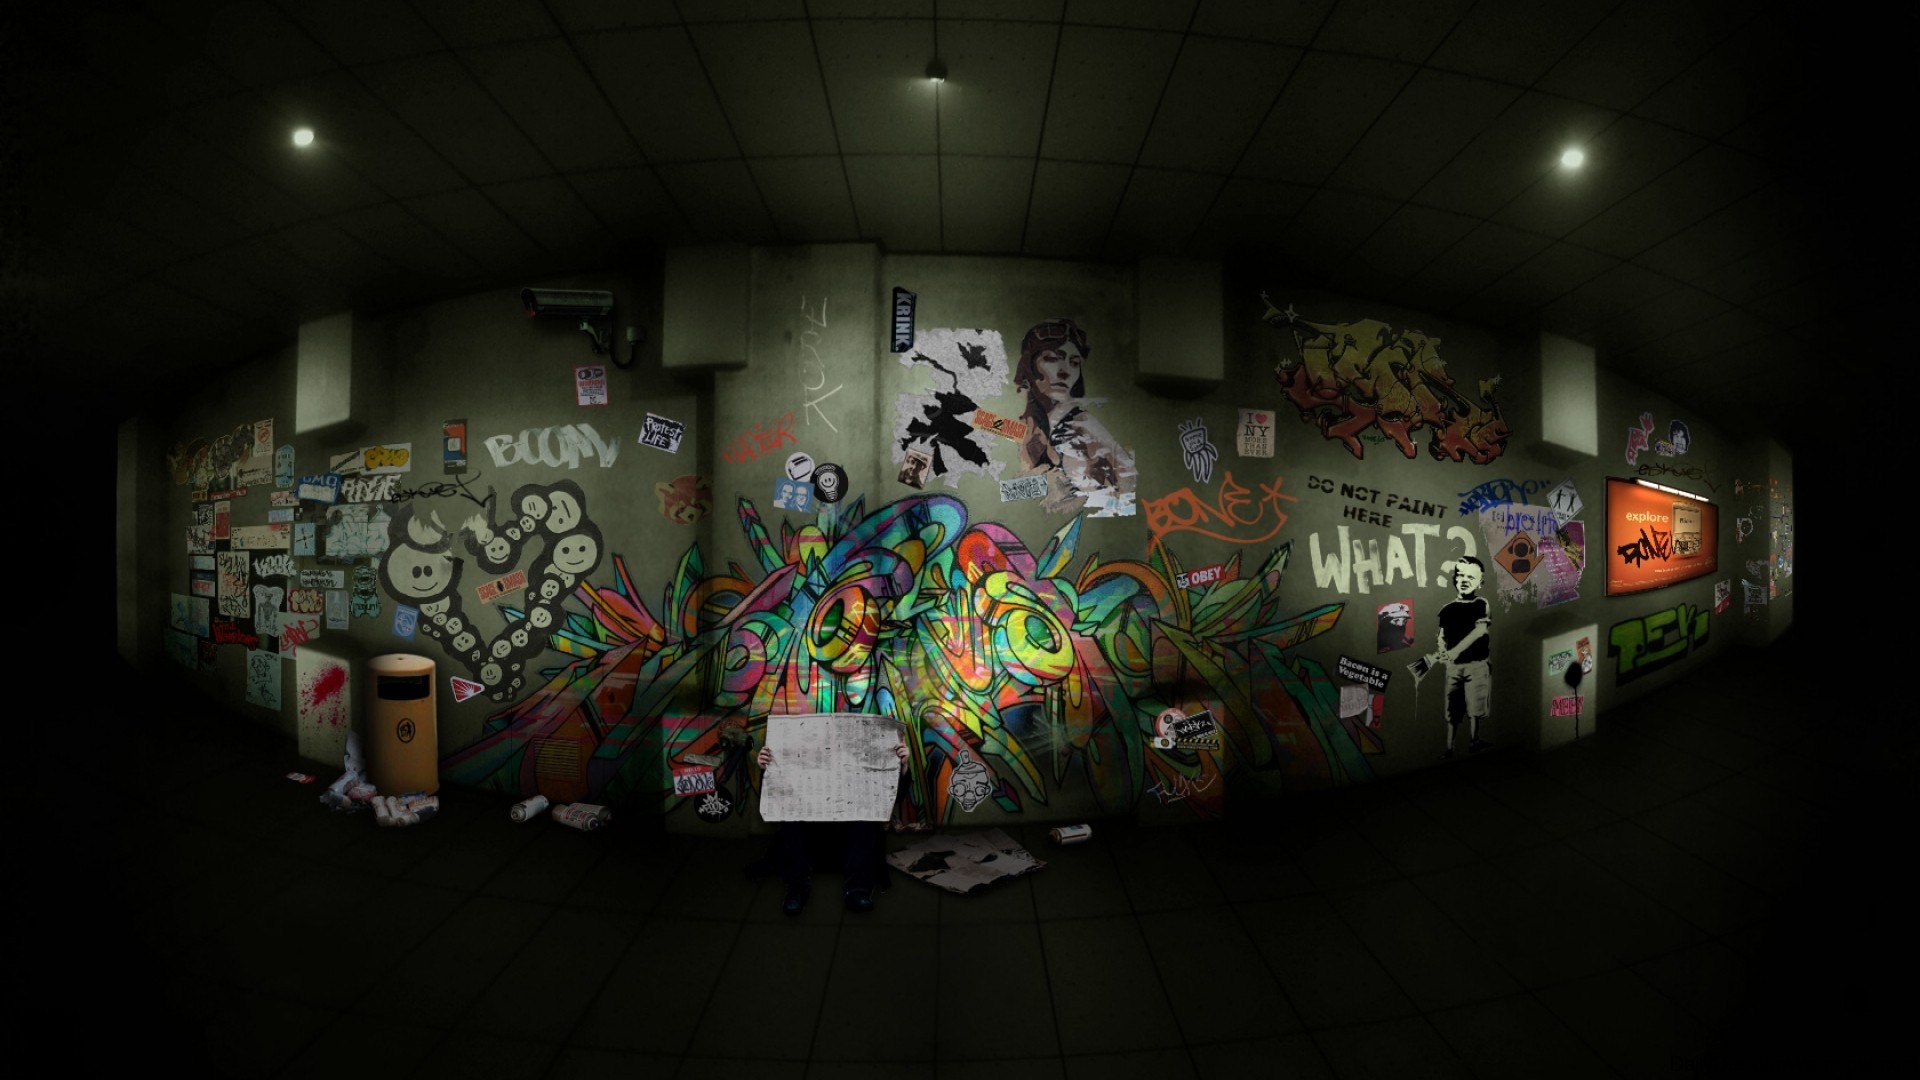 Graffiti wall - HD Wallpapers